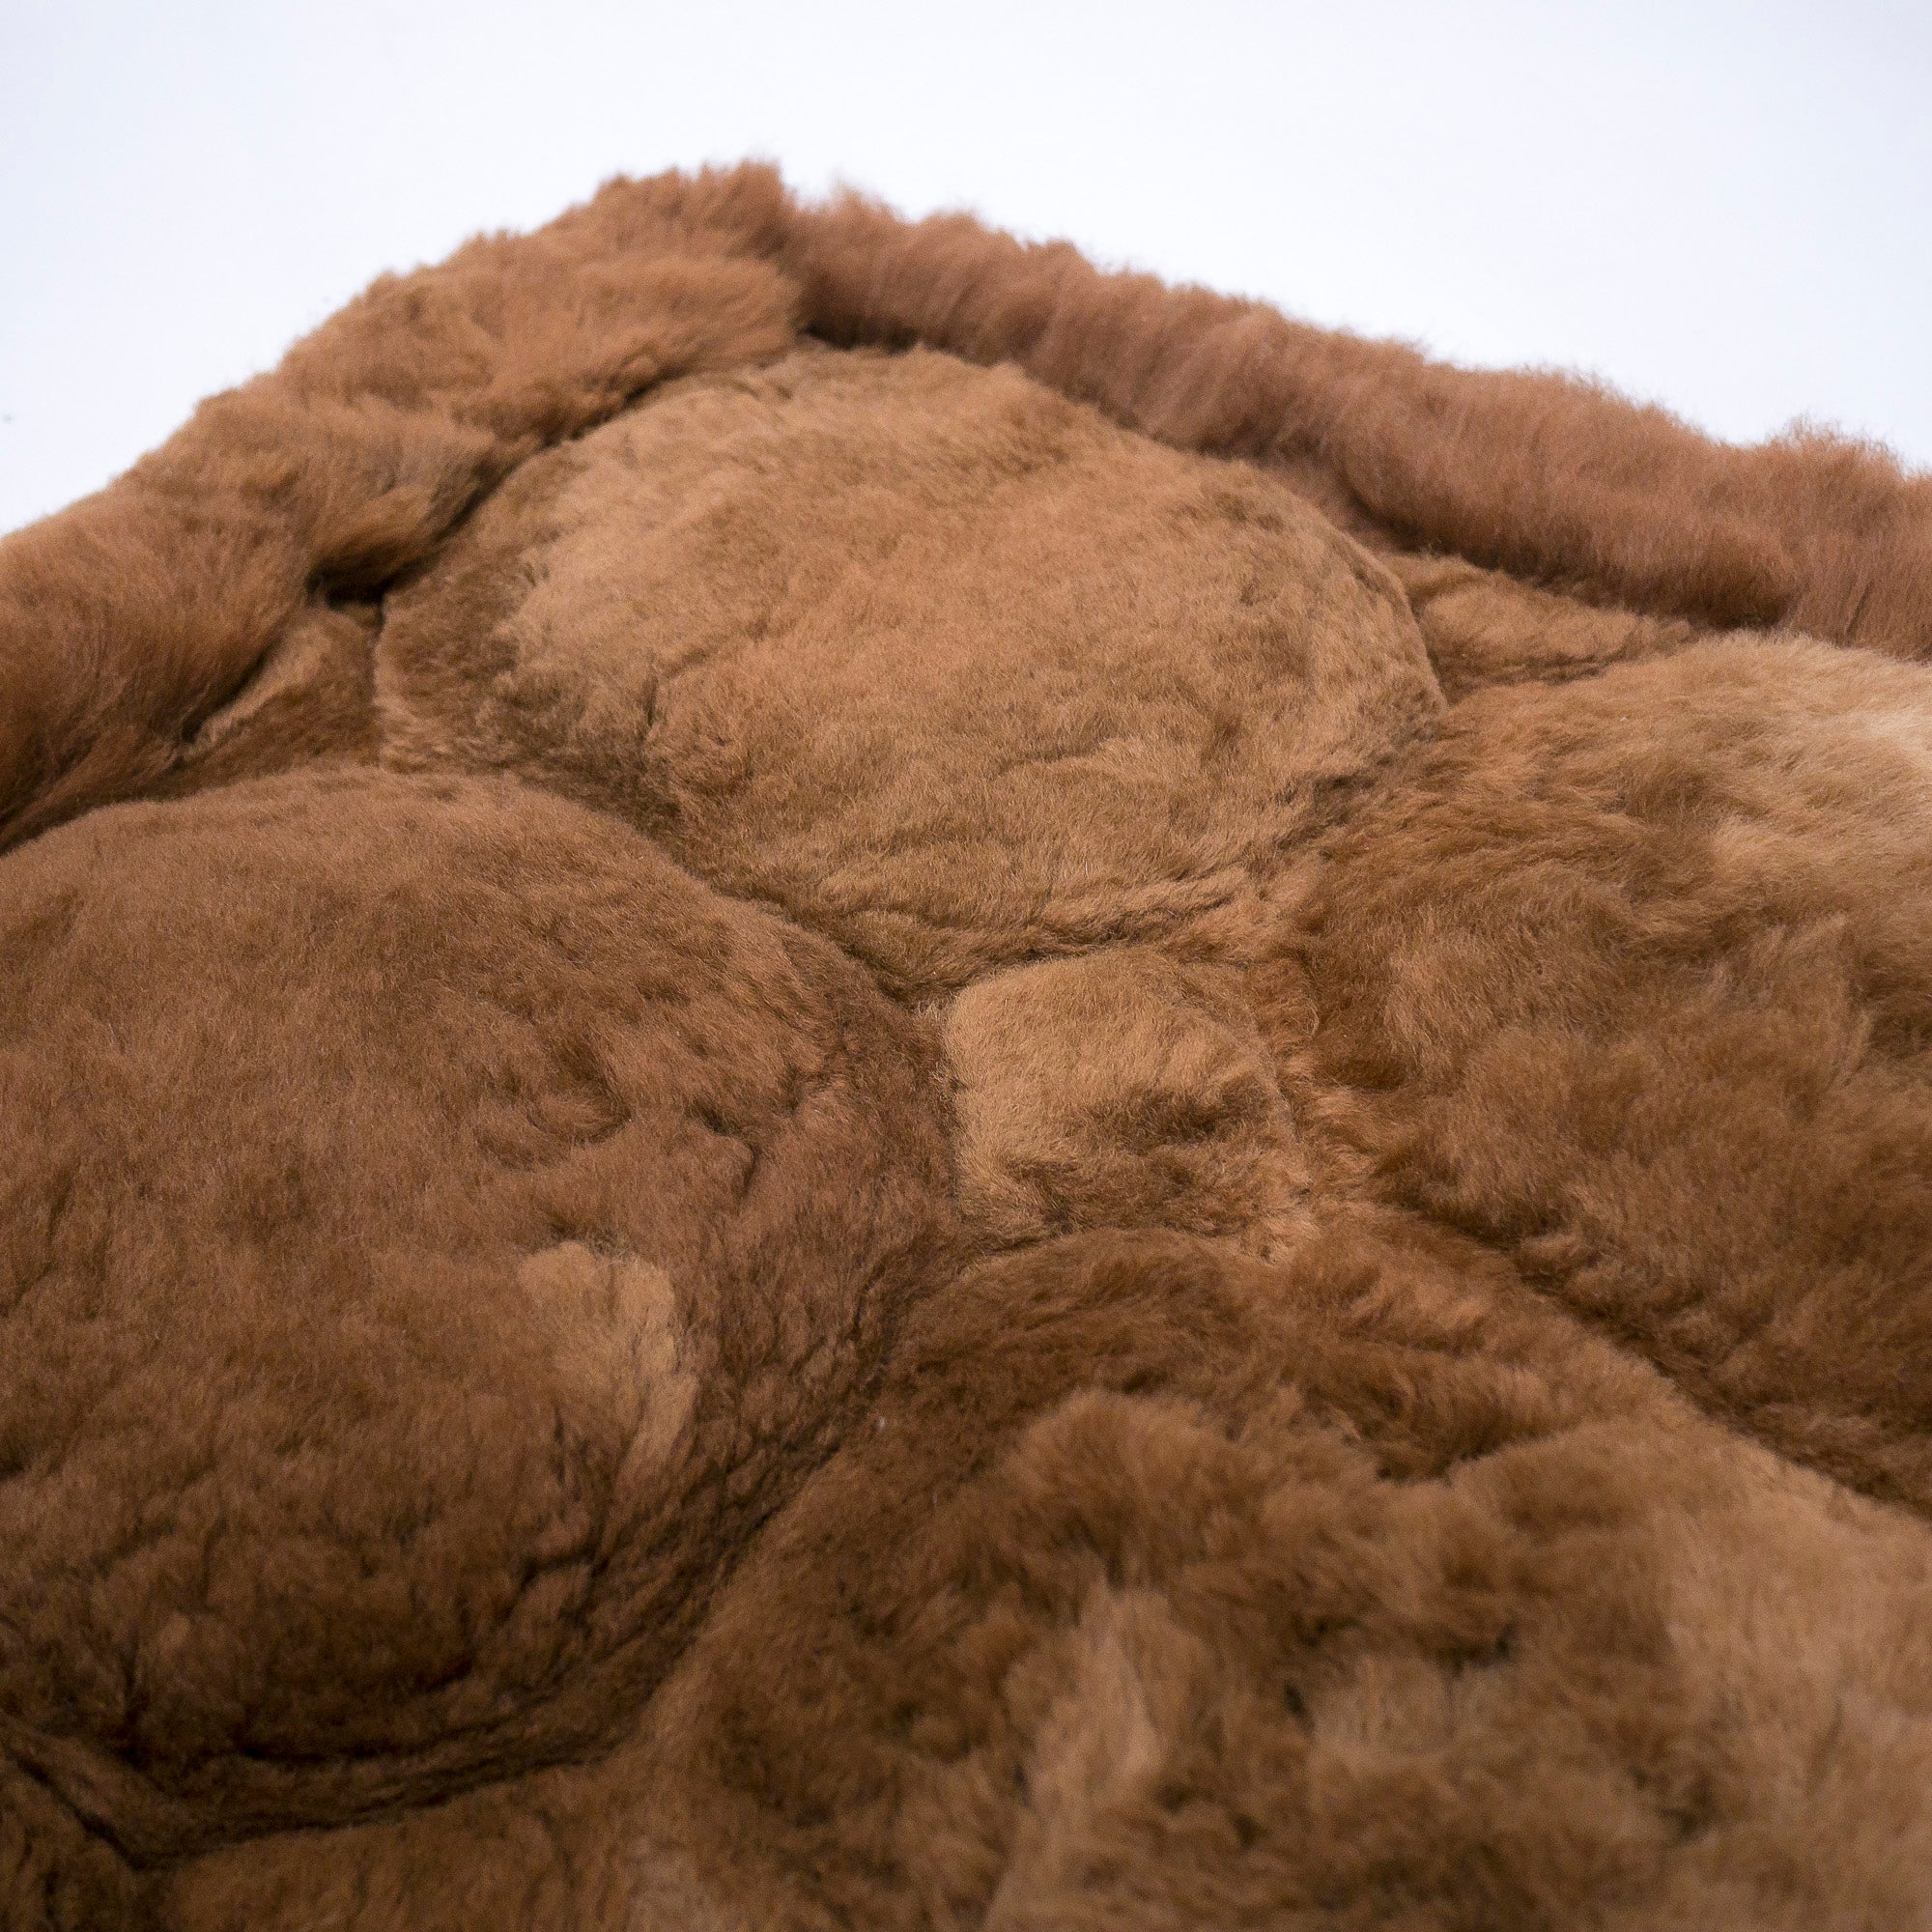 70cm x 45cm Dark Brown Alpaca Fur Rug, 'Comfort'